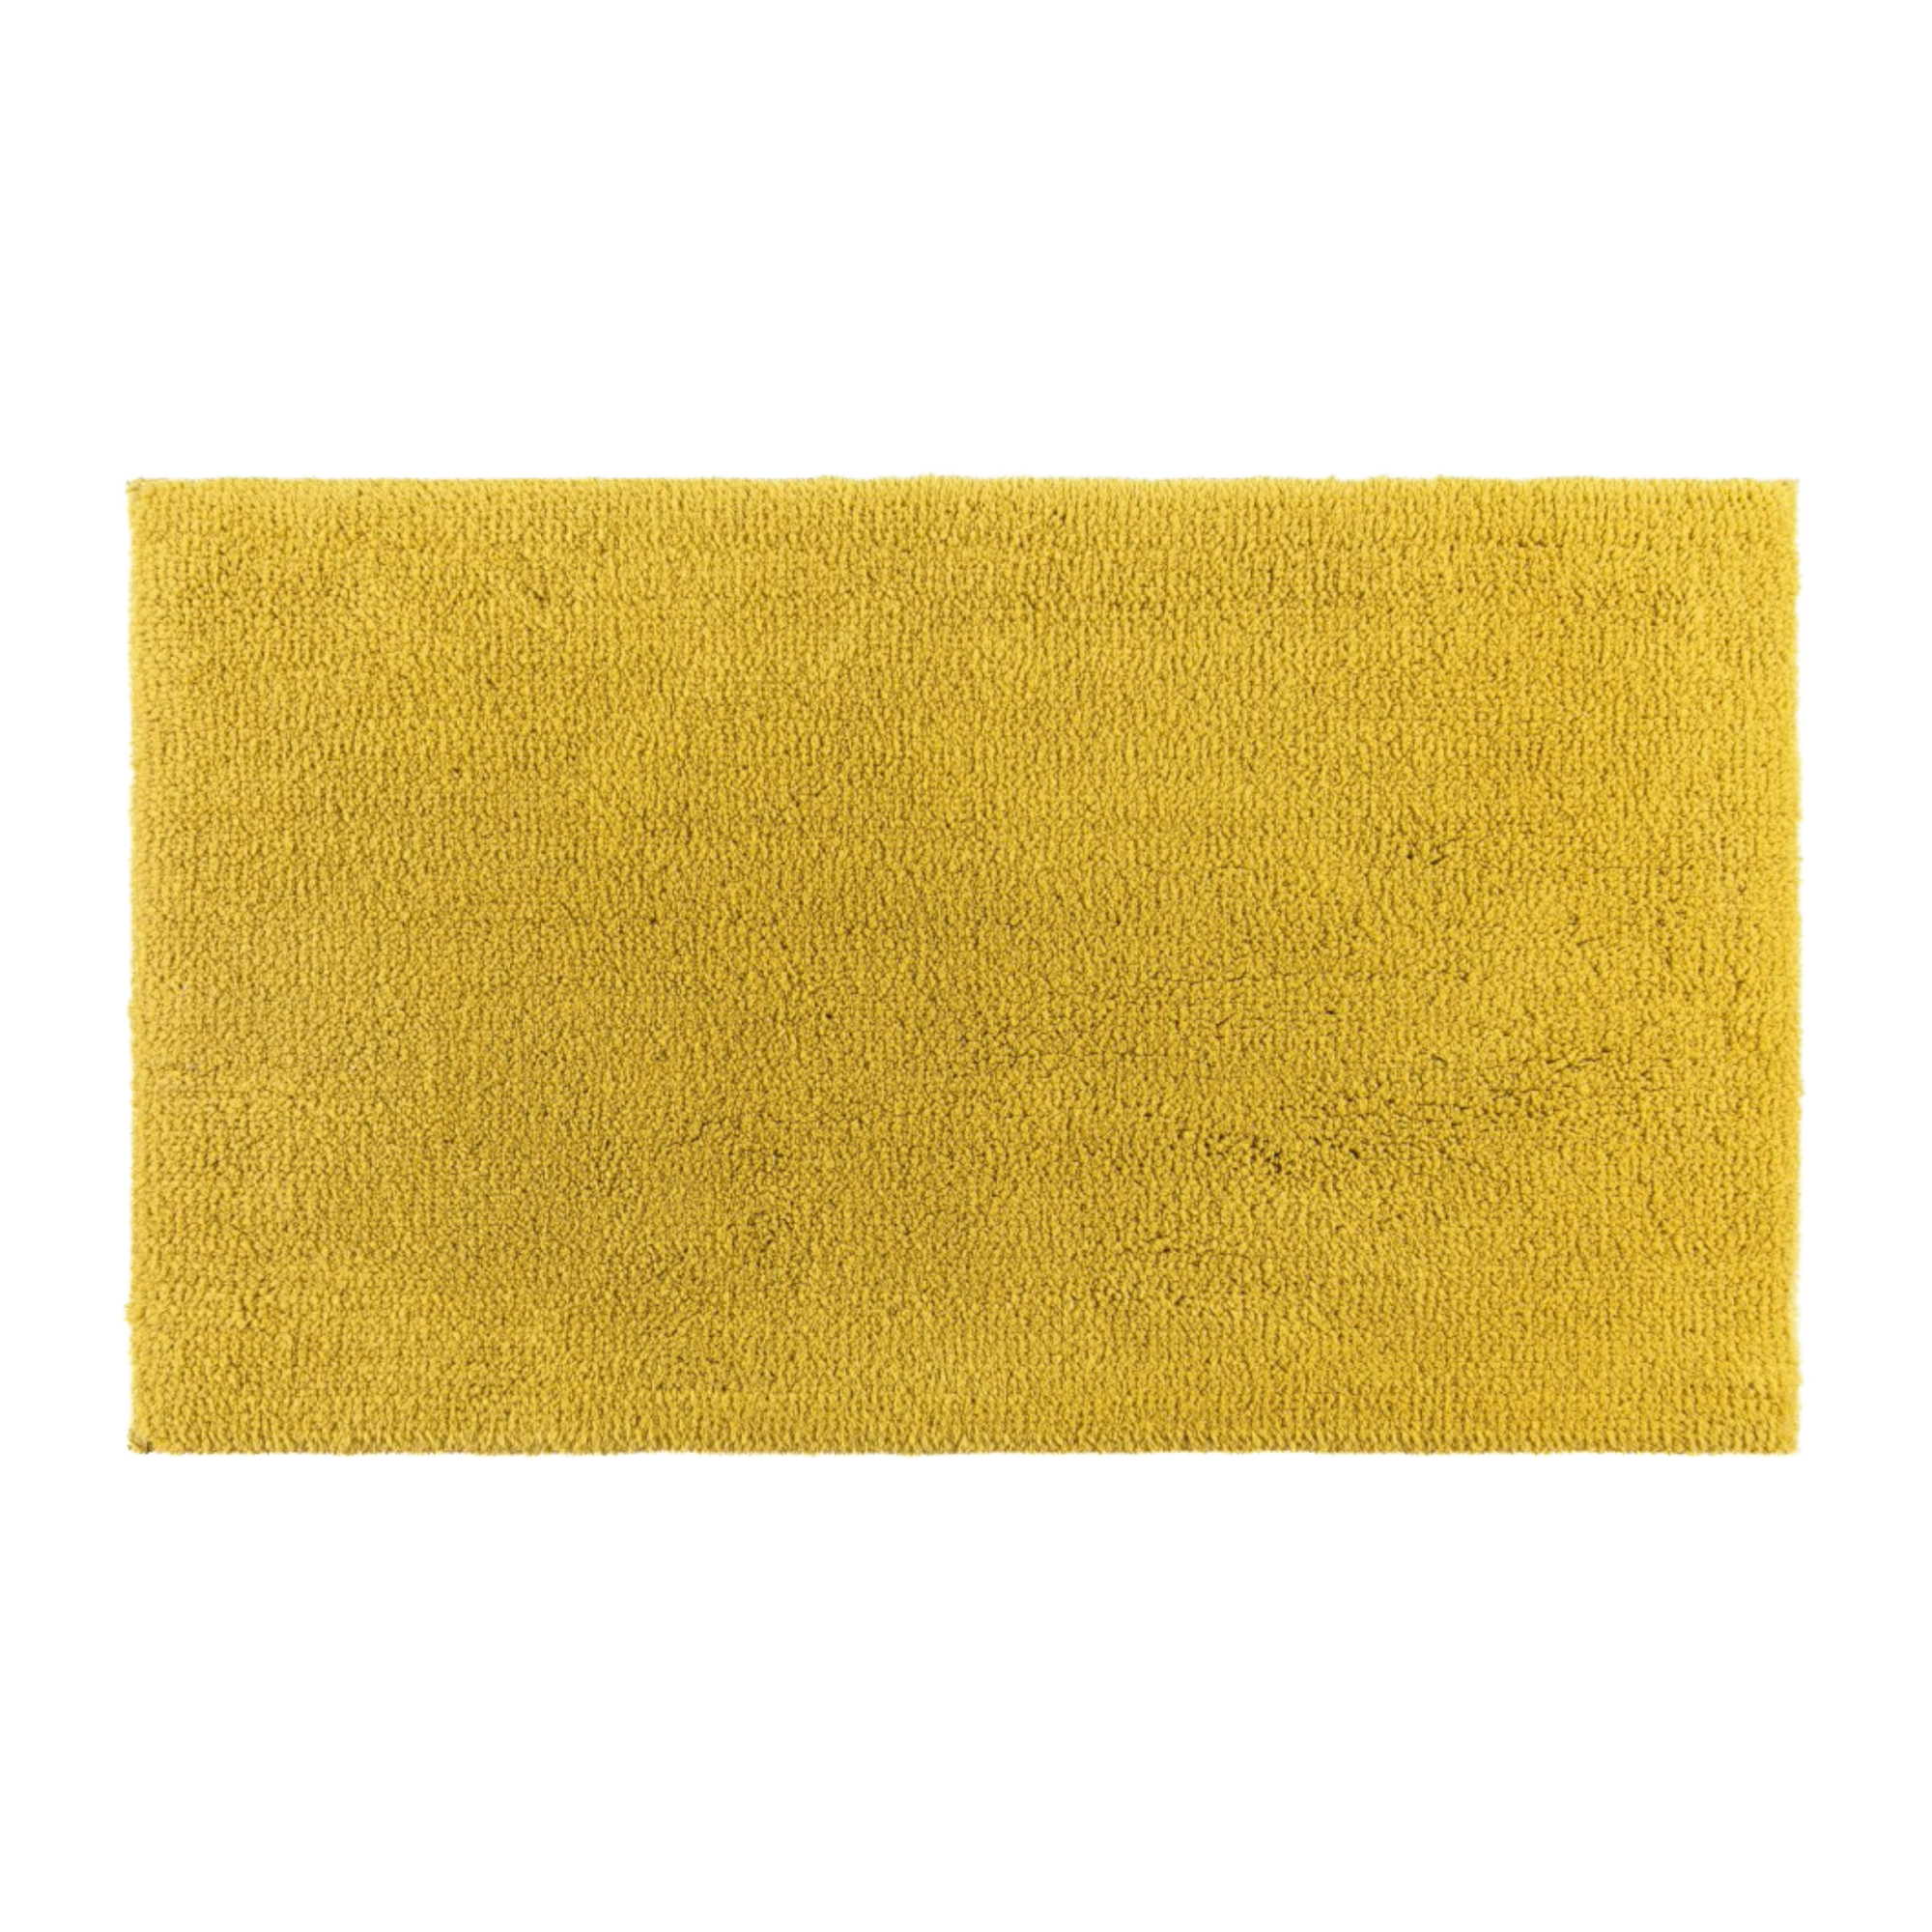 Graccioza Cool Bath Rugs Mustard Against a White Background